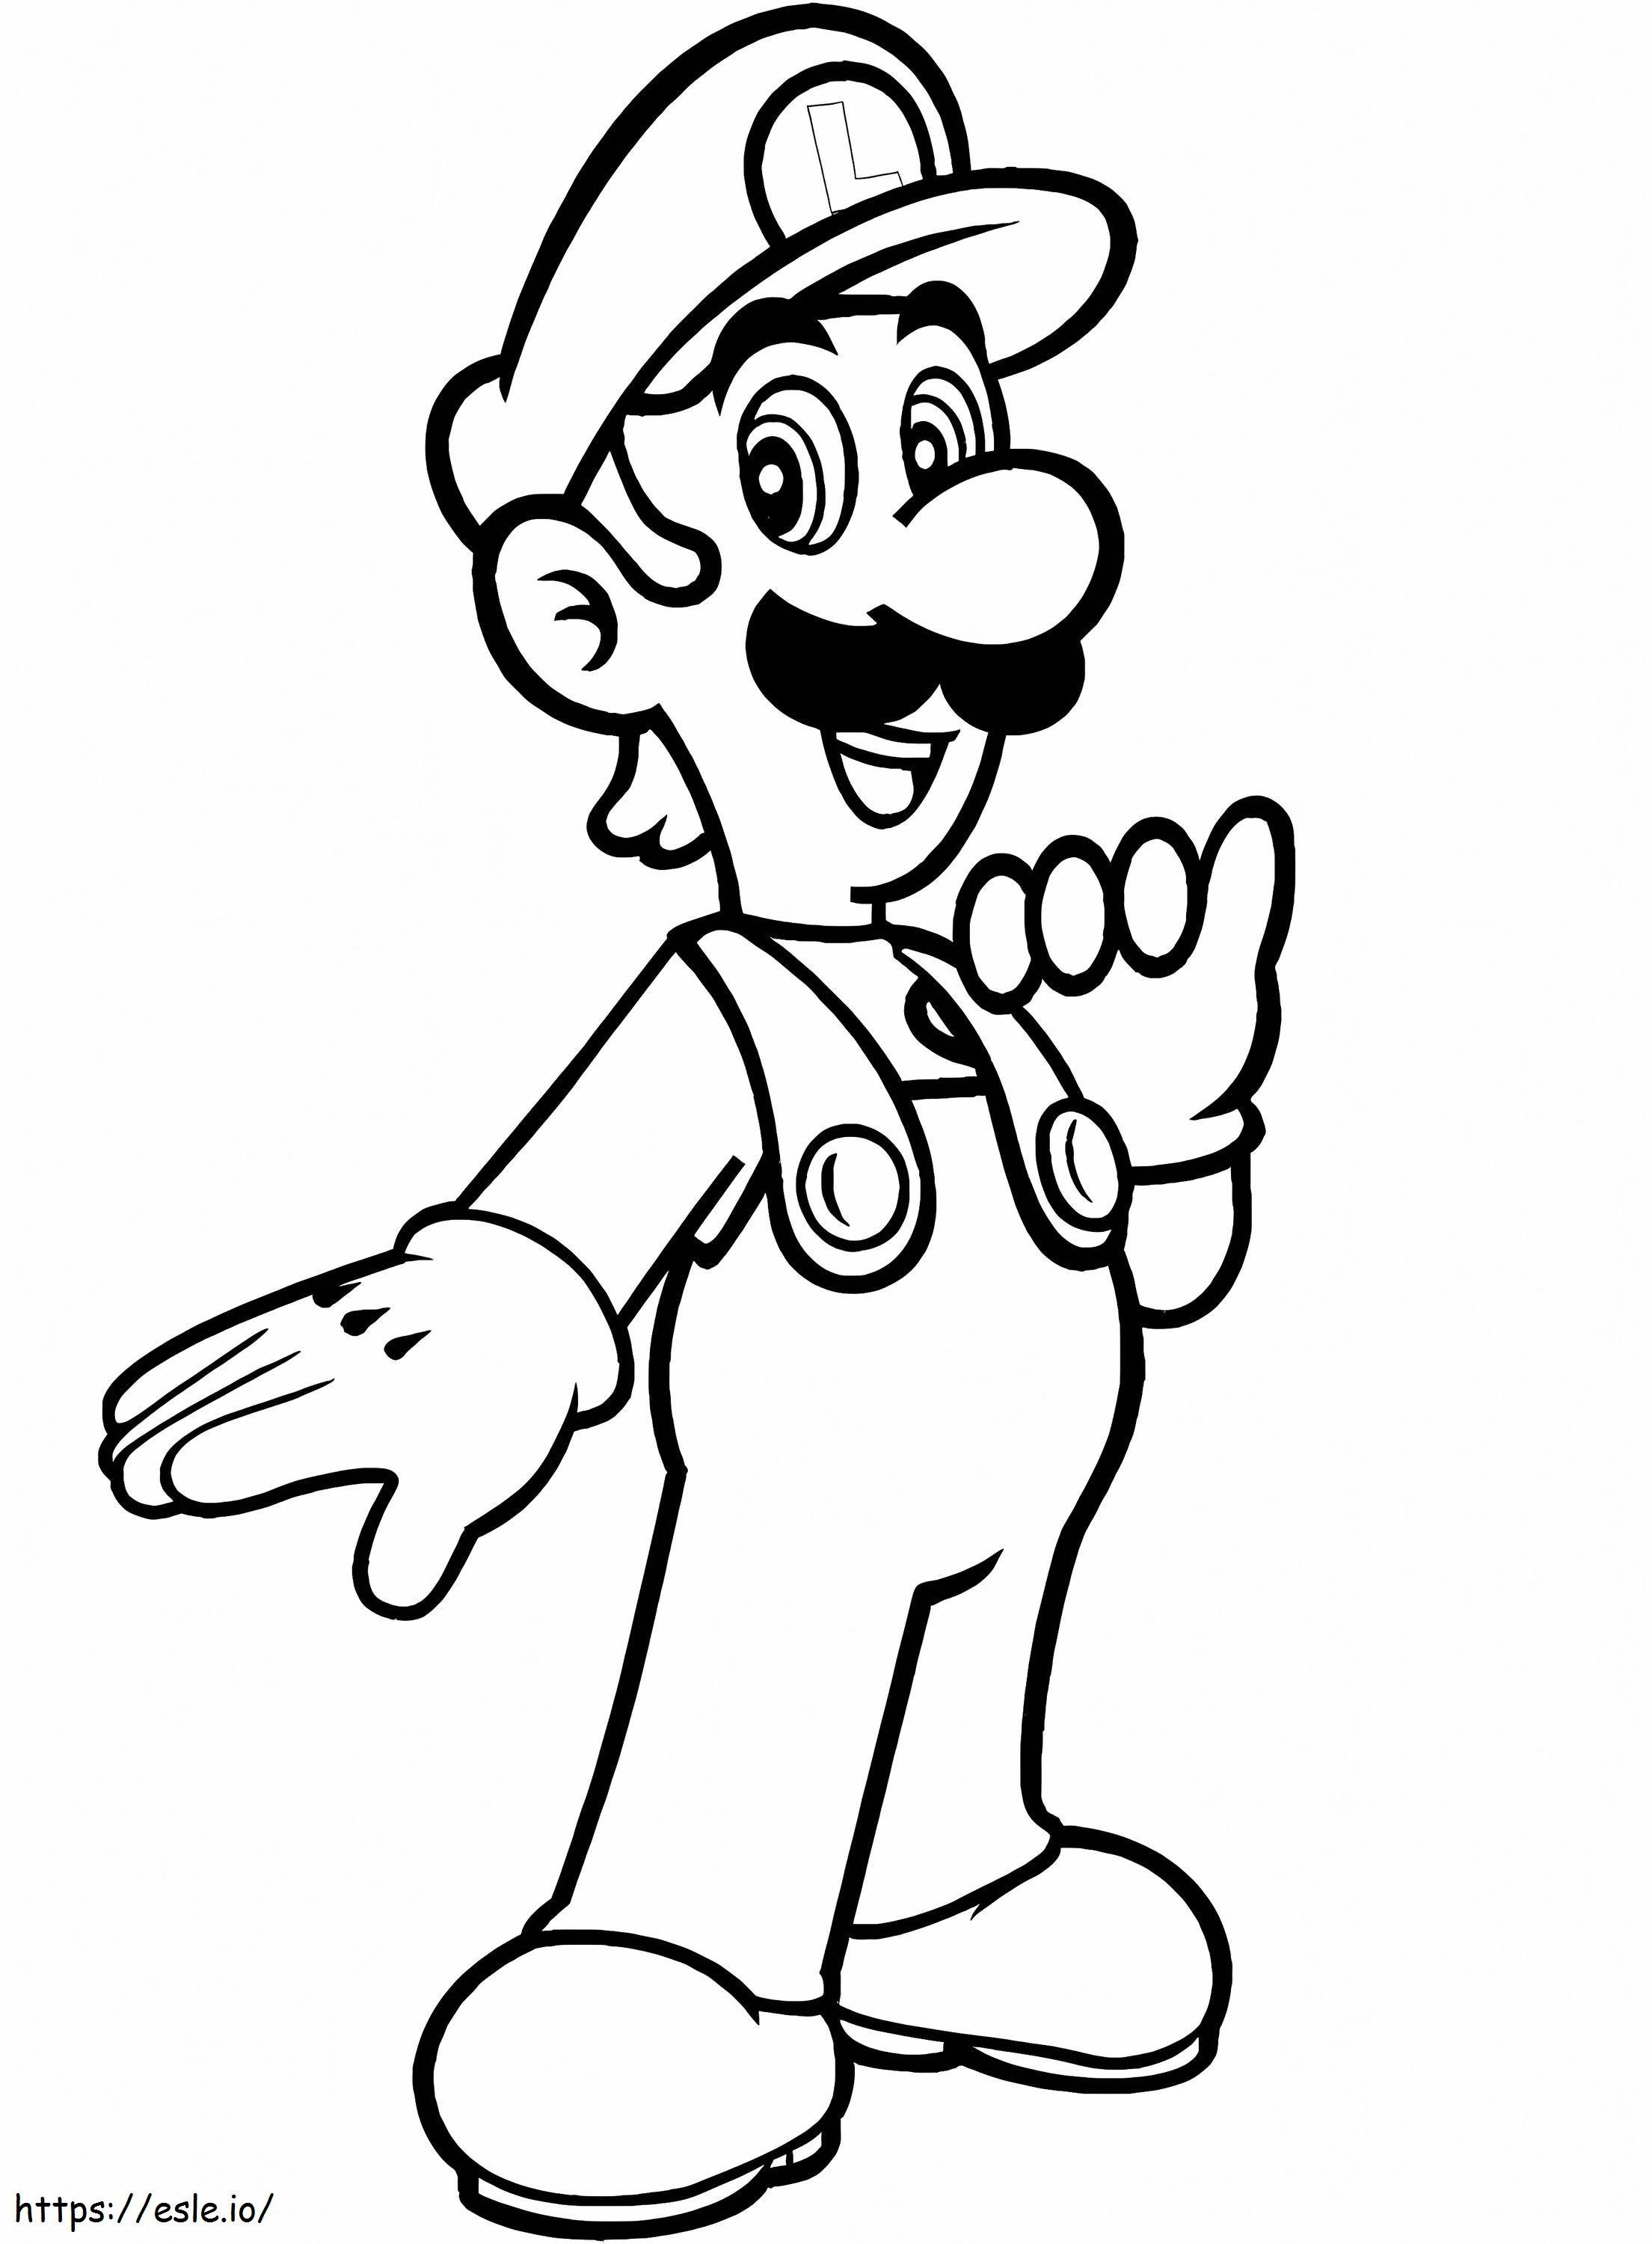 Luigi van Mario Bros. kleurplaat kleurplaat